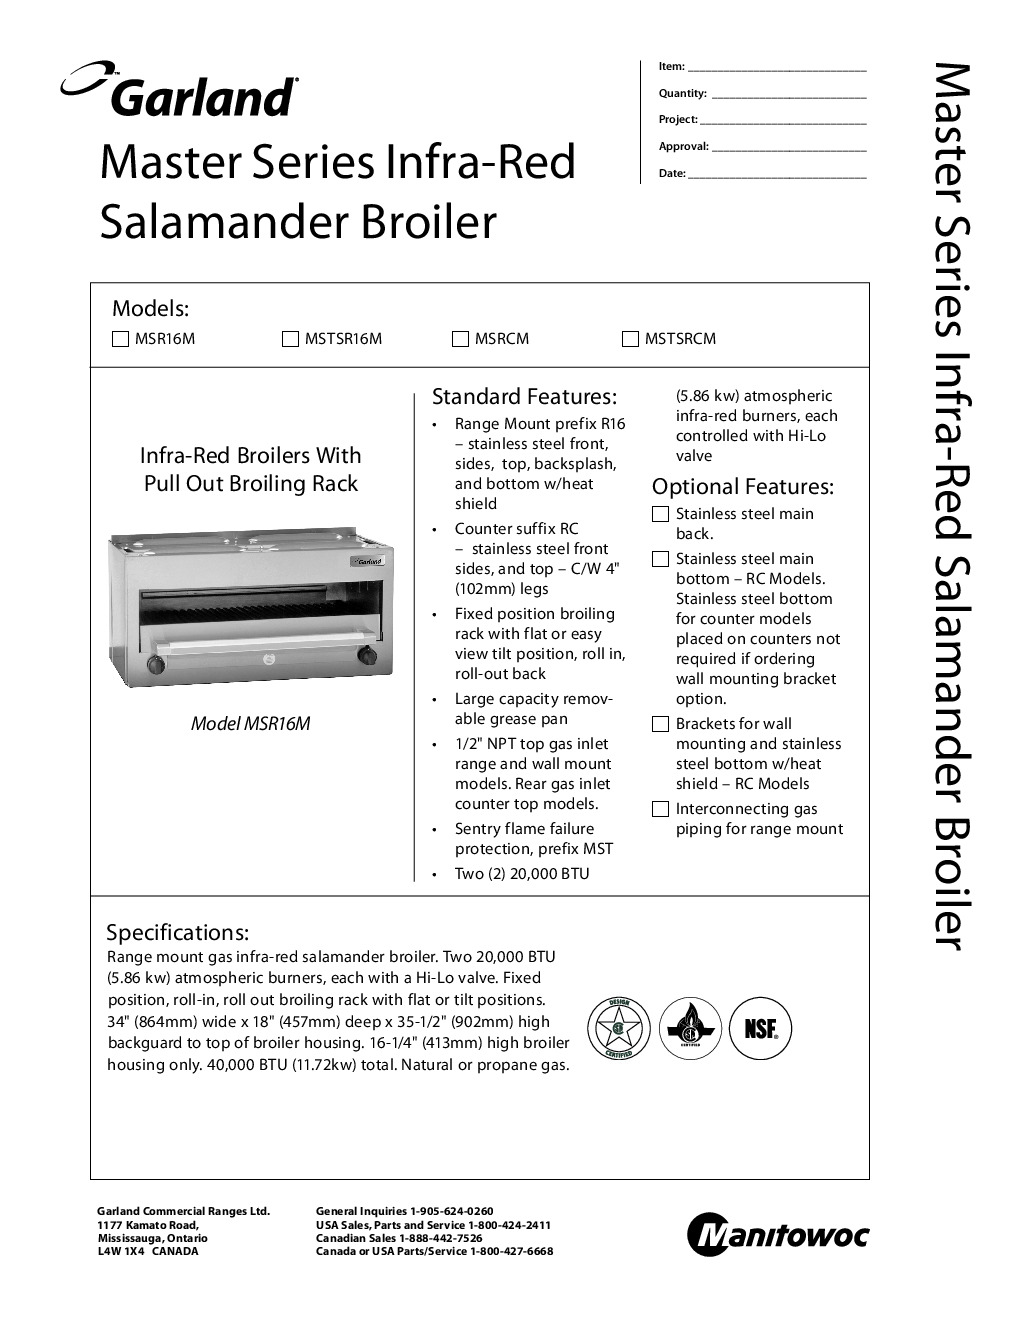 Garland US Range MSR16M Gas Salamander Broiler